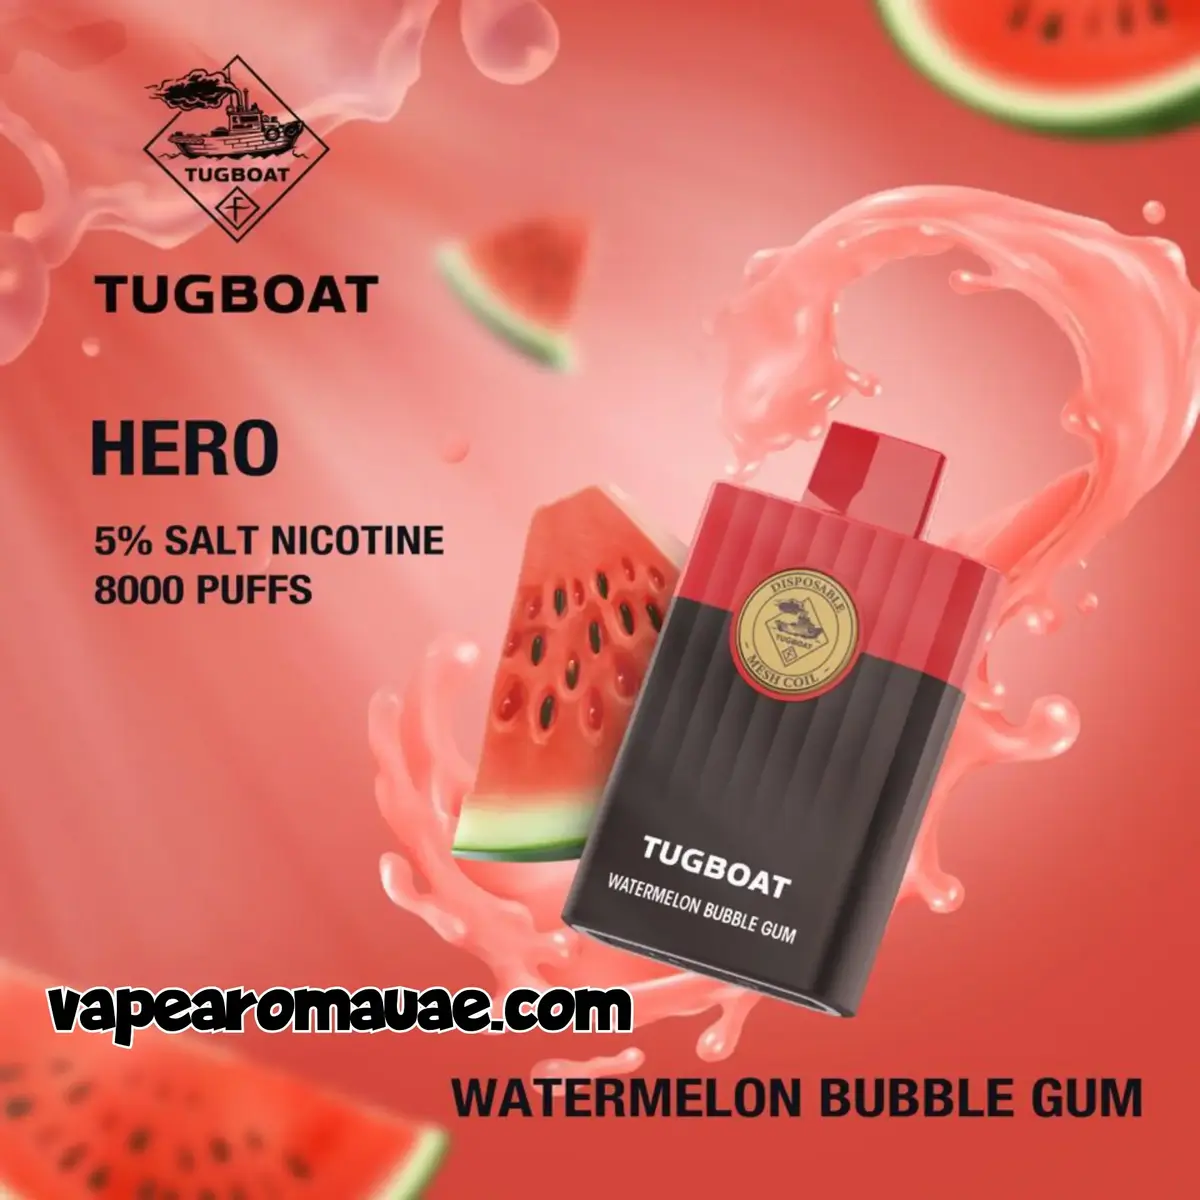 Tugboat Hero 8000 Puffs Disposable Vape Kit in Dubai- Best Price